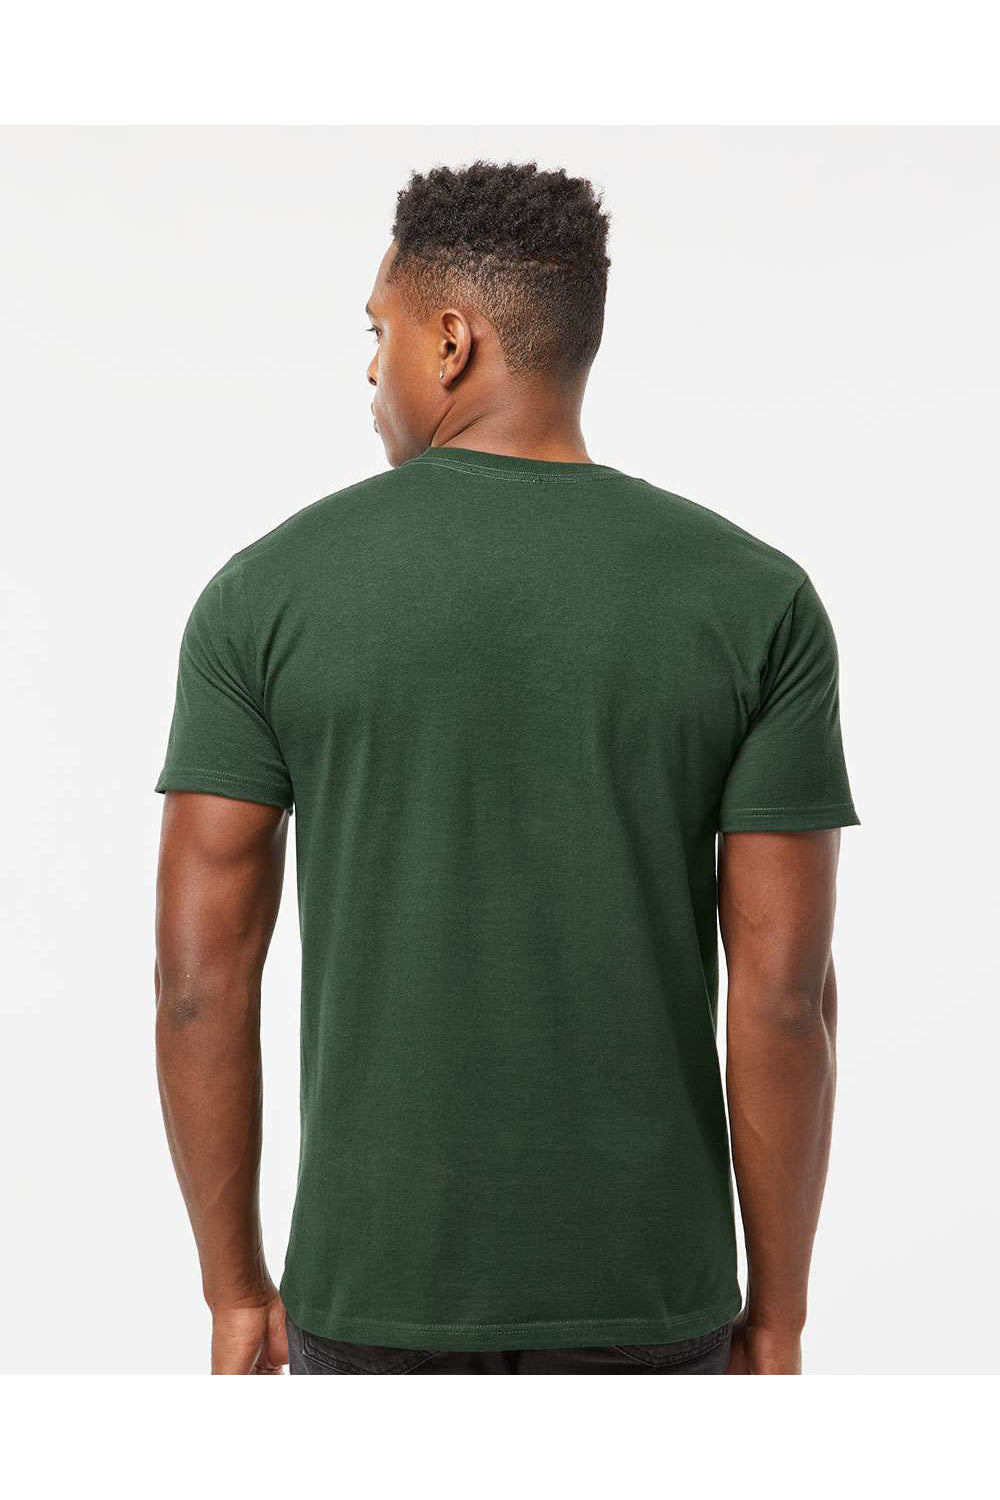 Tultex 290 Mens Jersey Short Sleeve Crewneck T-Shirt Forest Green Model Back